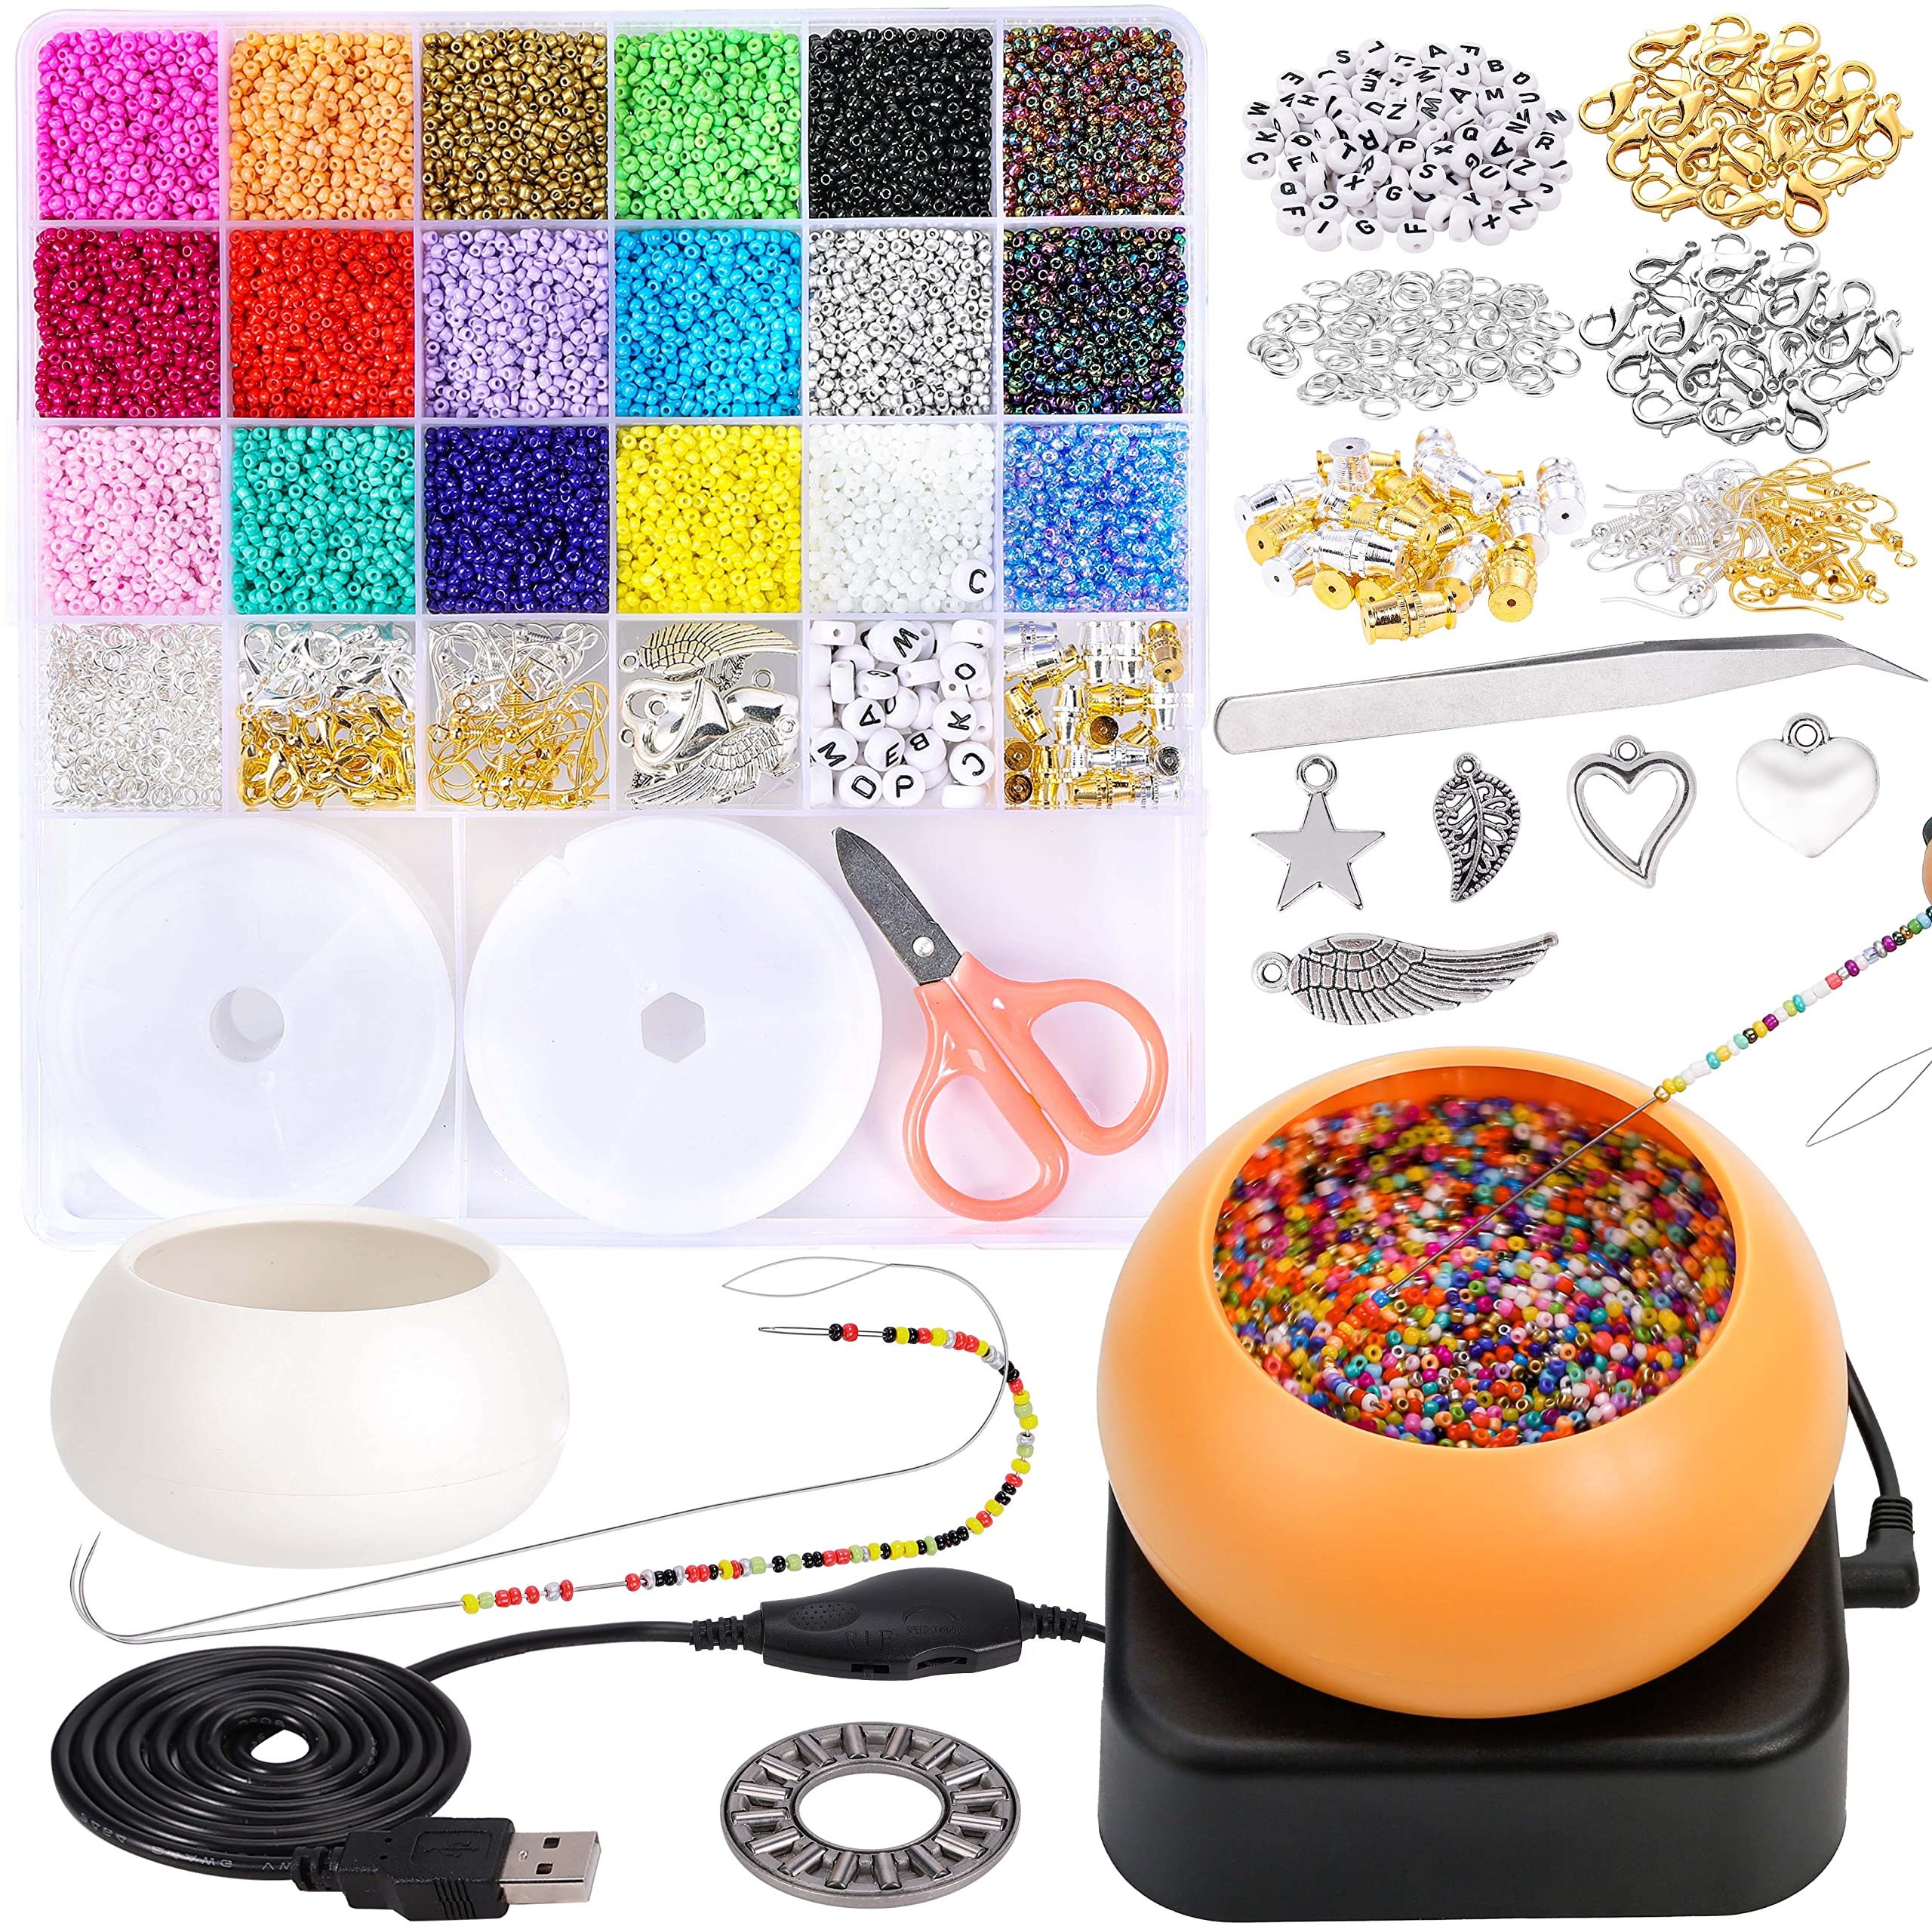 Electric Waist Beads Kit - 3658 PCS Waist Bead Making Kit with Electric  Bead Spinner, Beads for Waist Beads Making, Curved Needles So On - Waist  Bead Maker/Jewelry Maker: Buy Online at